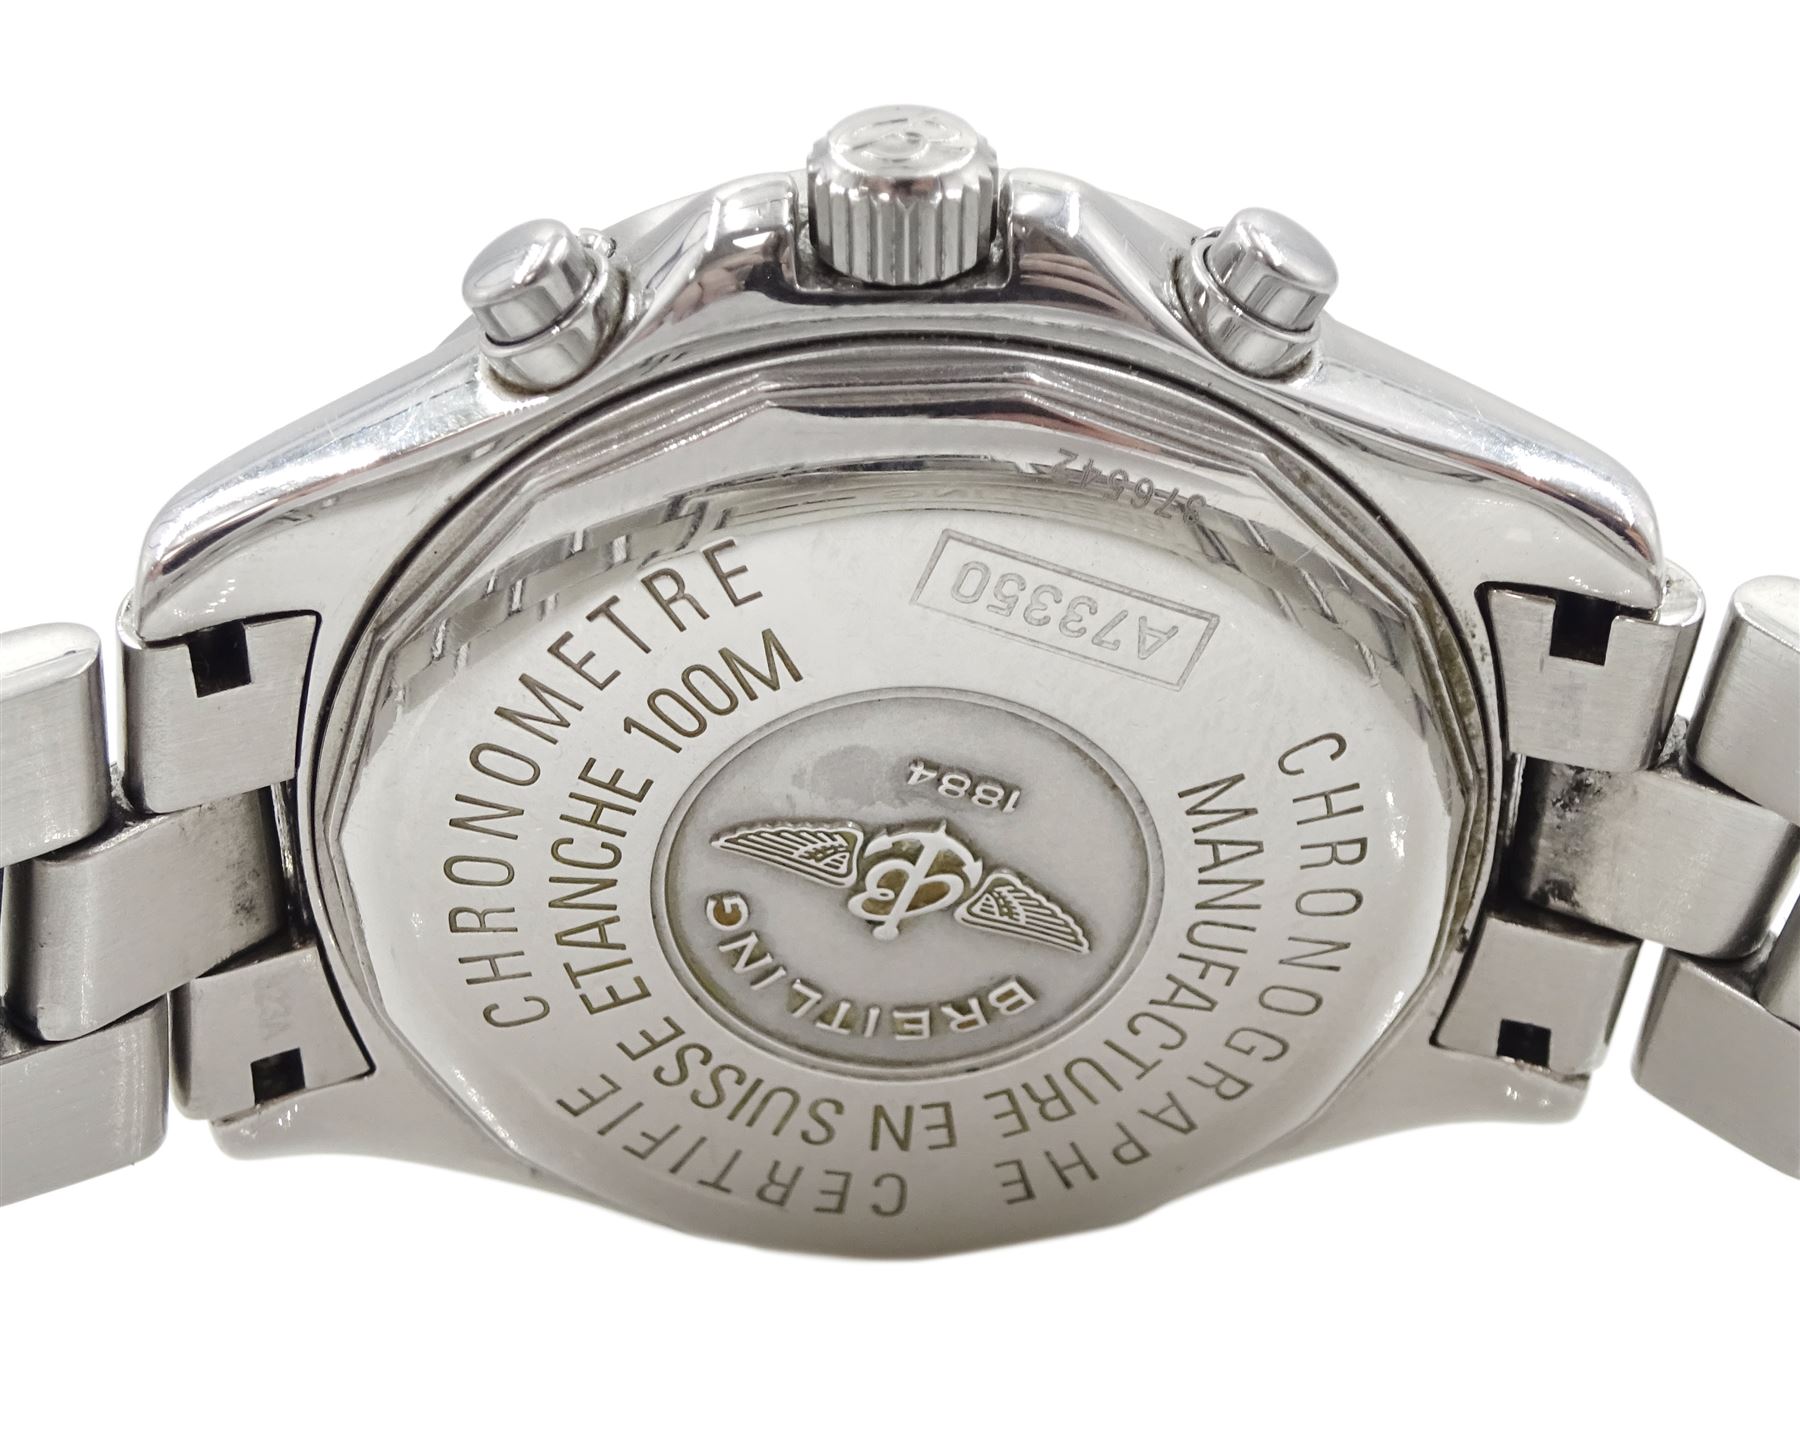 Breitling Colt gentleman's stainless steel quartz chronograph wristwatch - Image 5 of 7